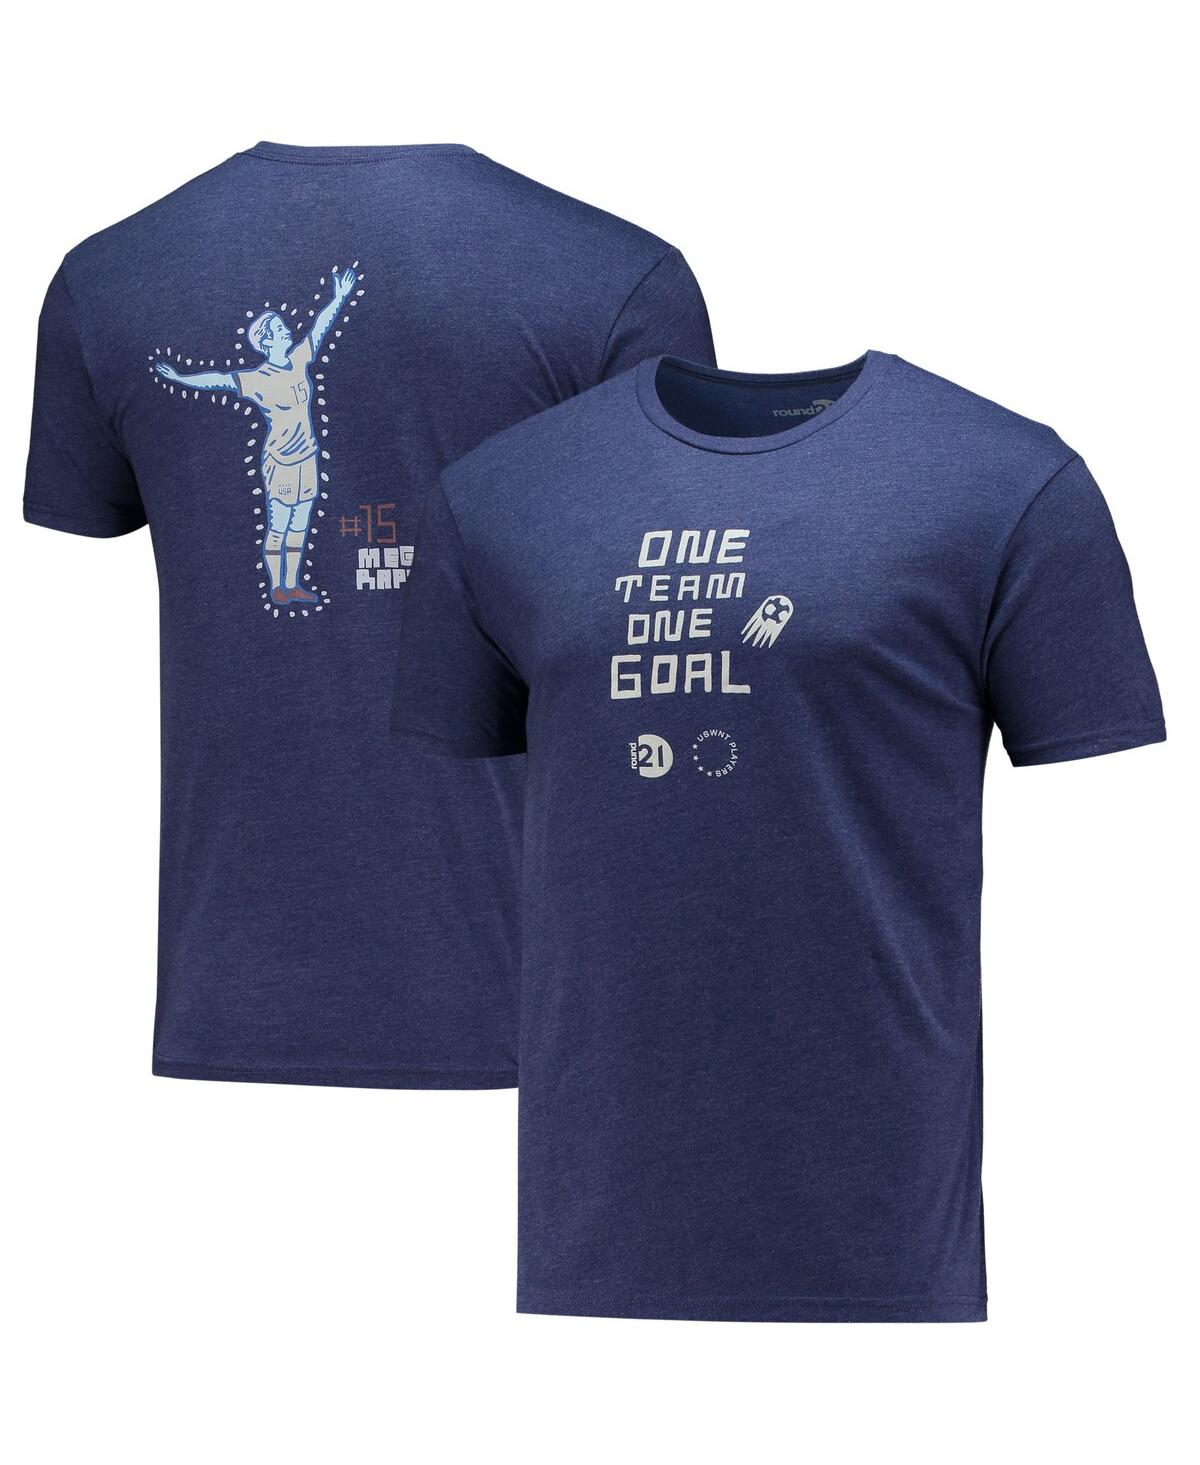 Shop Round21 Men's  Megan Rapinoe Navy Uswnt One Team One Goal T-shirt